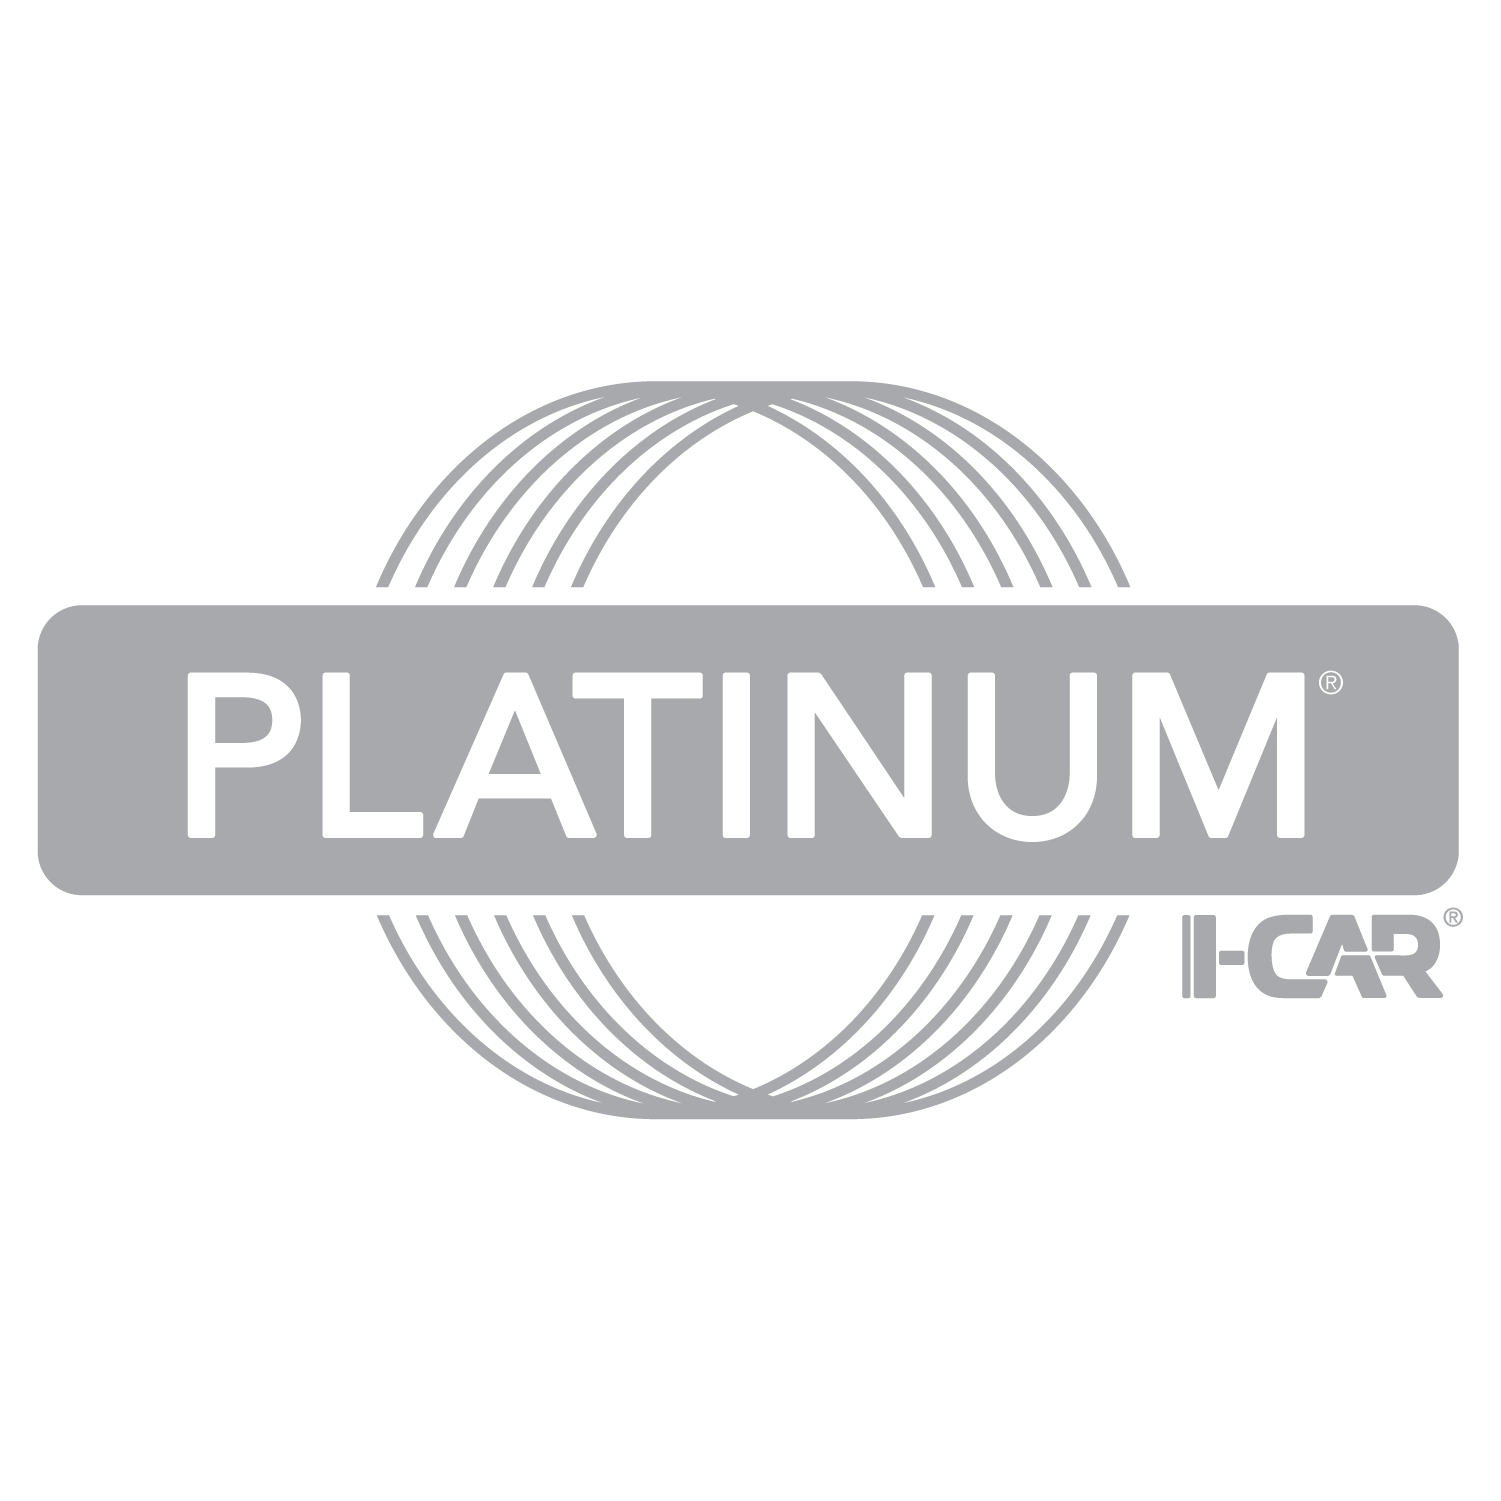 I-CAR Platinum Certified